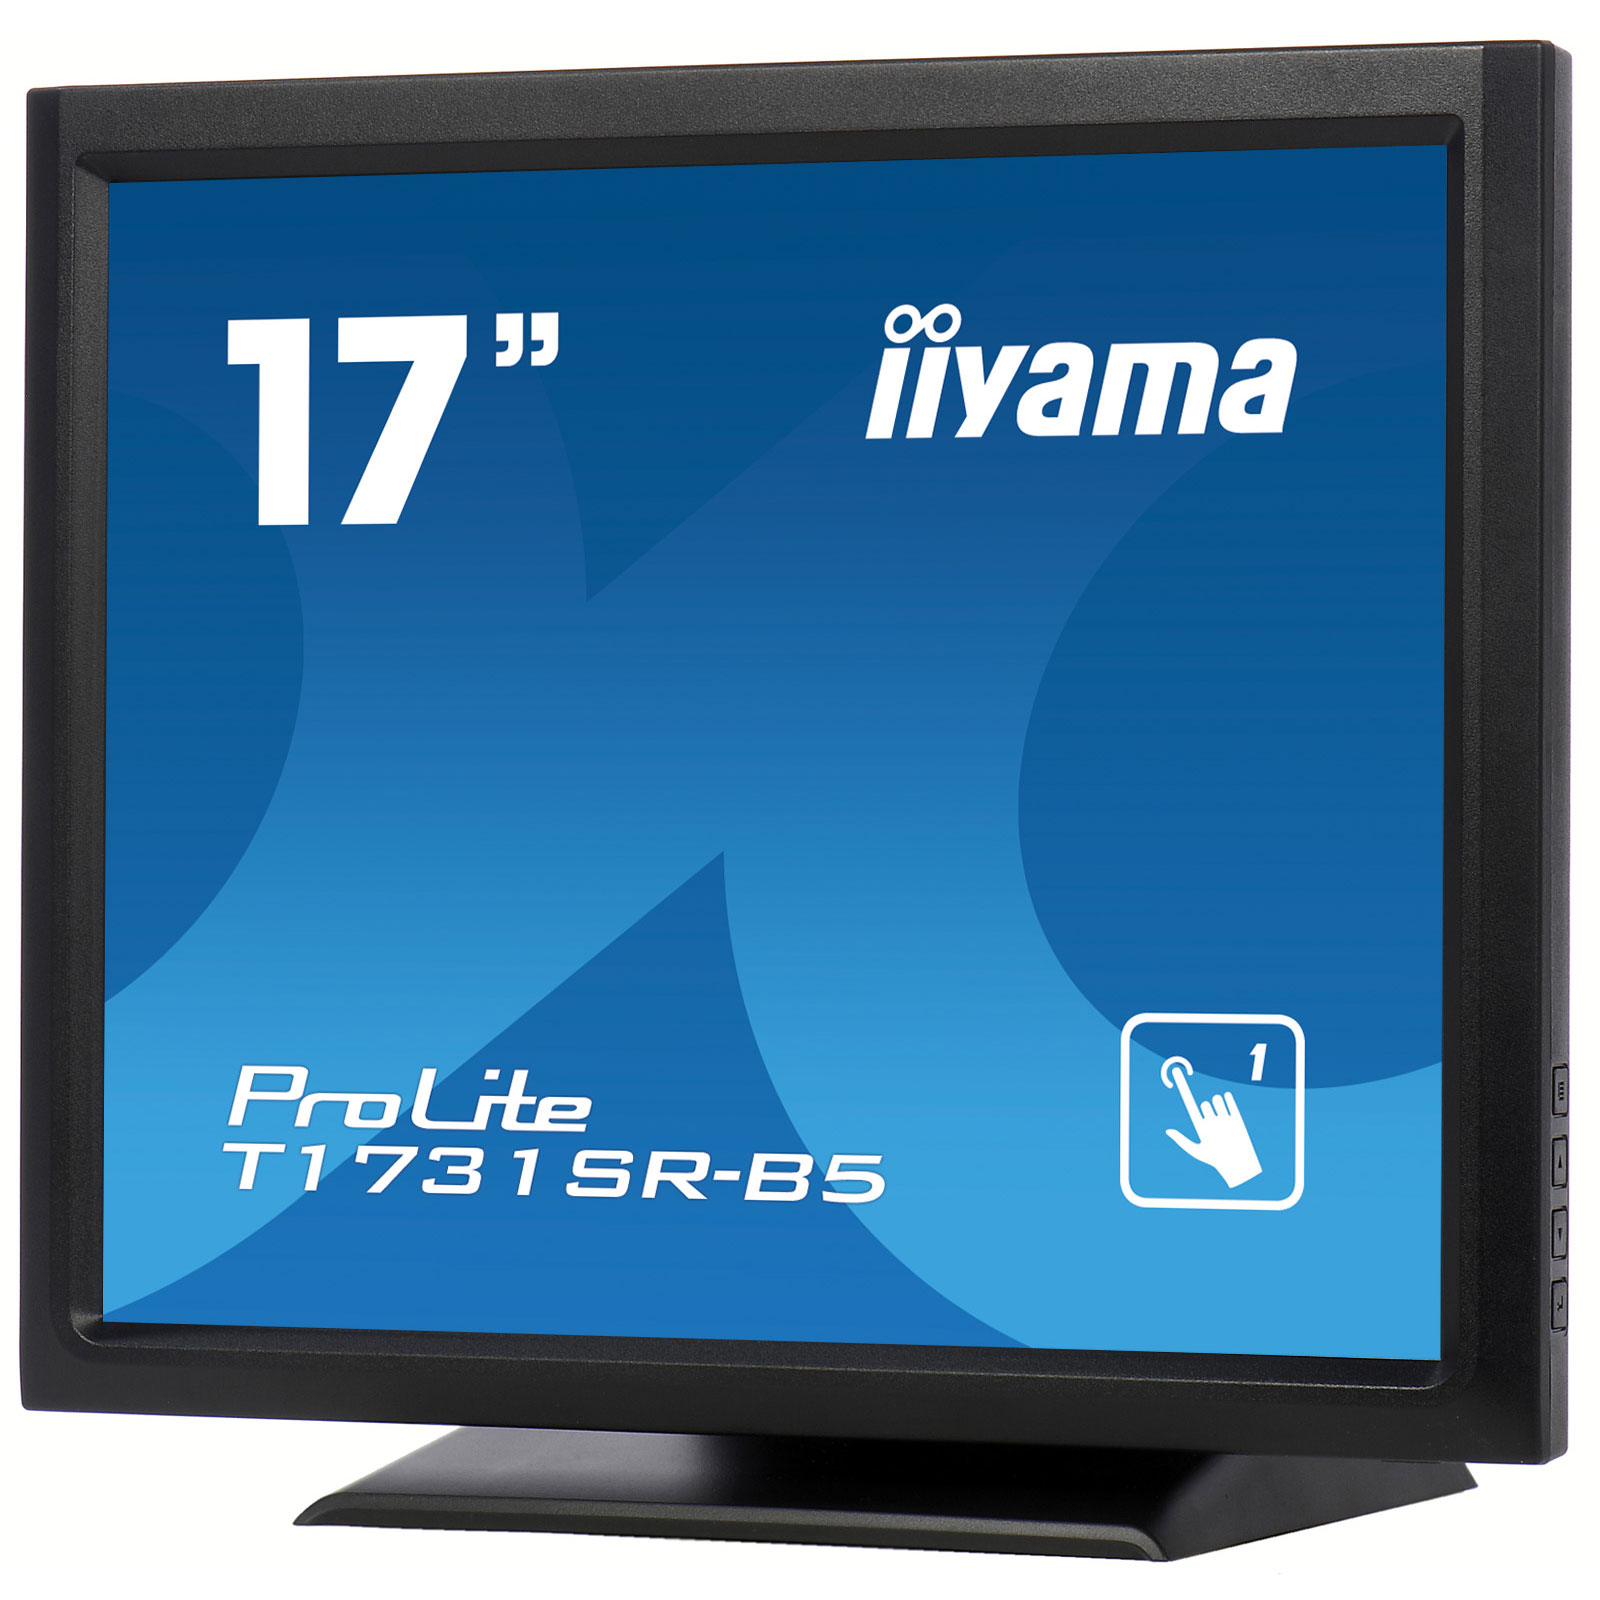 43,20cm (17,0") Iiyama ProLite T1731SR-B5 SXGA Monitor mit Touchscreen 